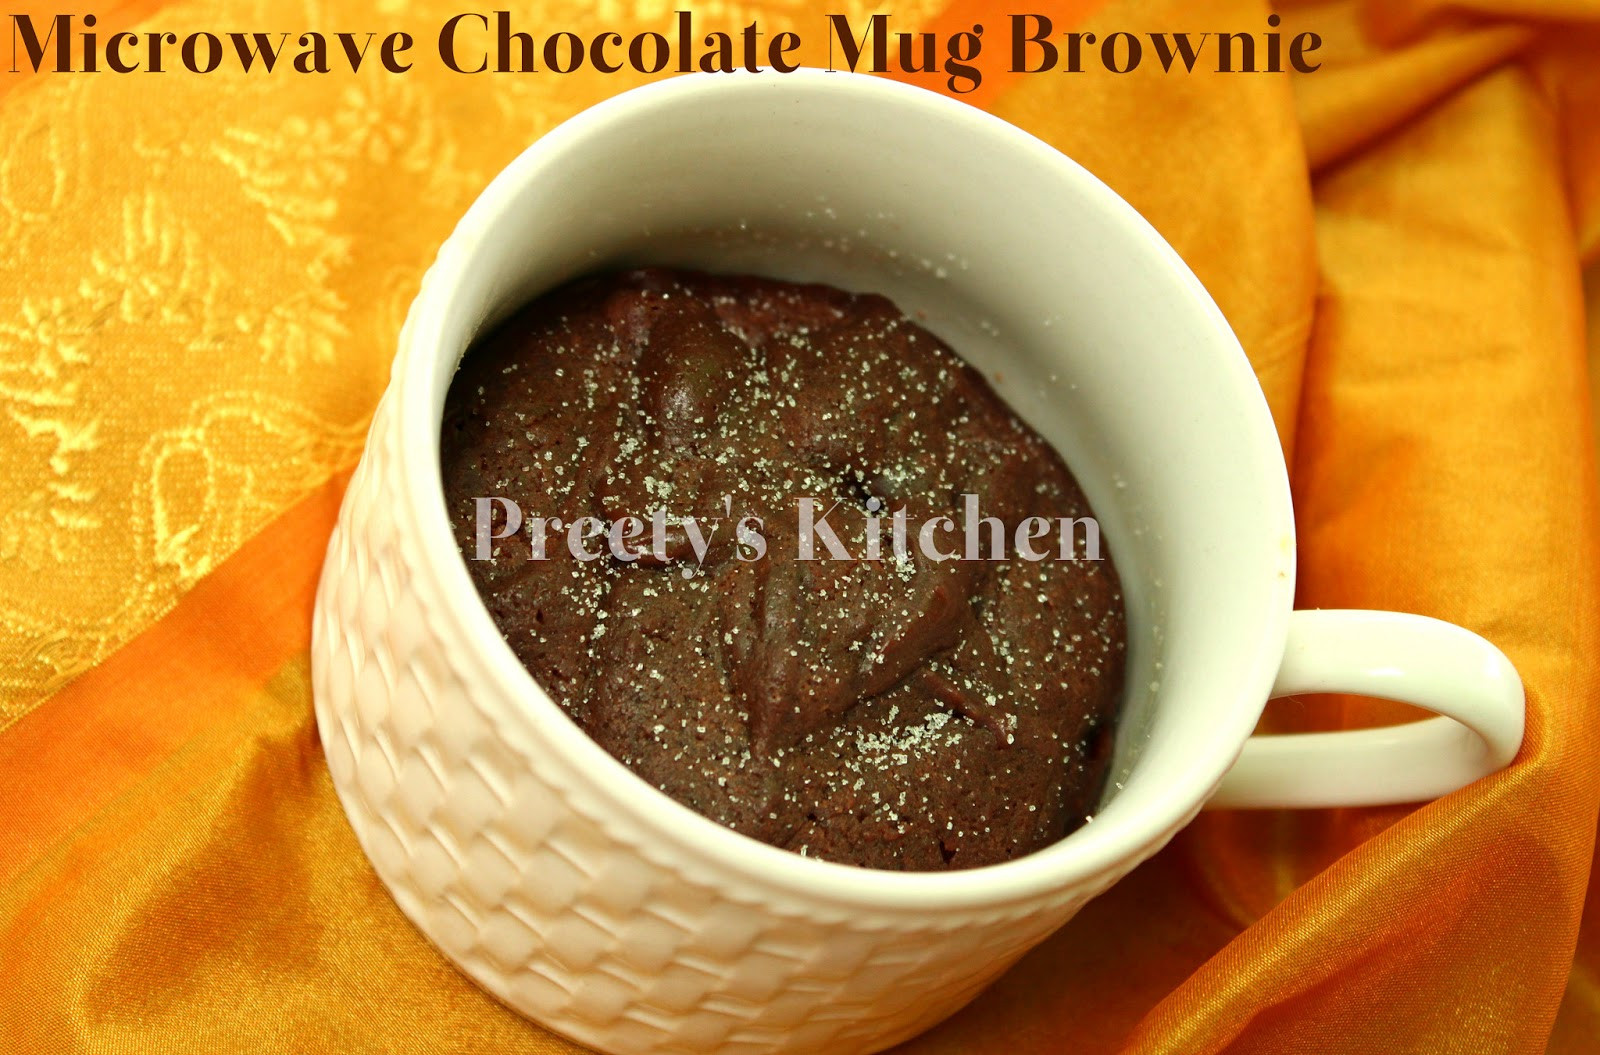 Easy Microwave Desserts
 Preety s Kitchen 1 Minute Microwave Chocolate Mug Brownie